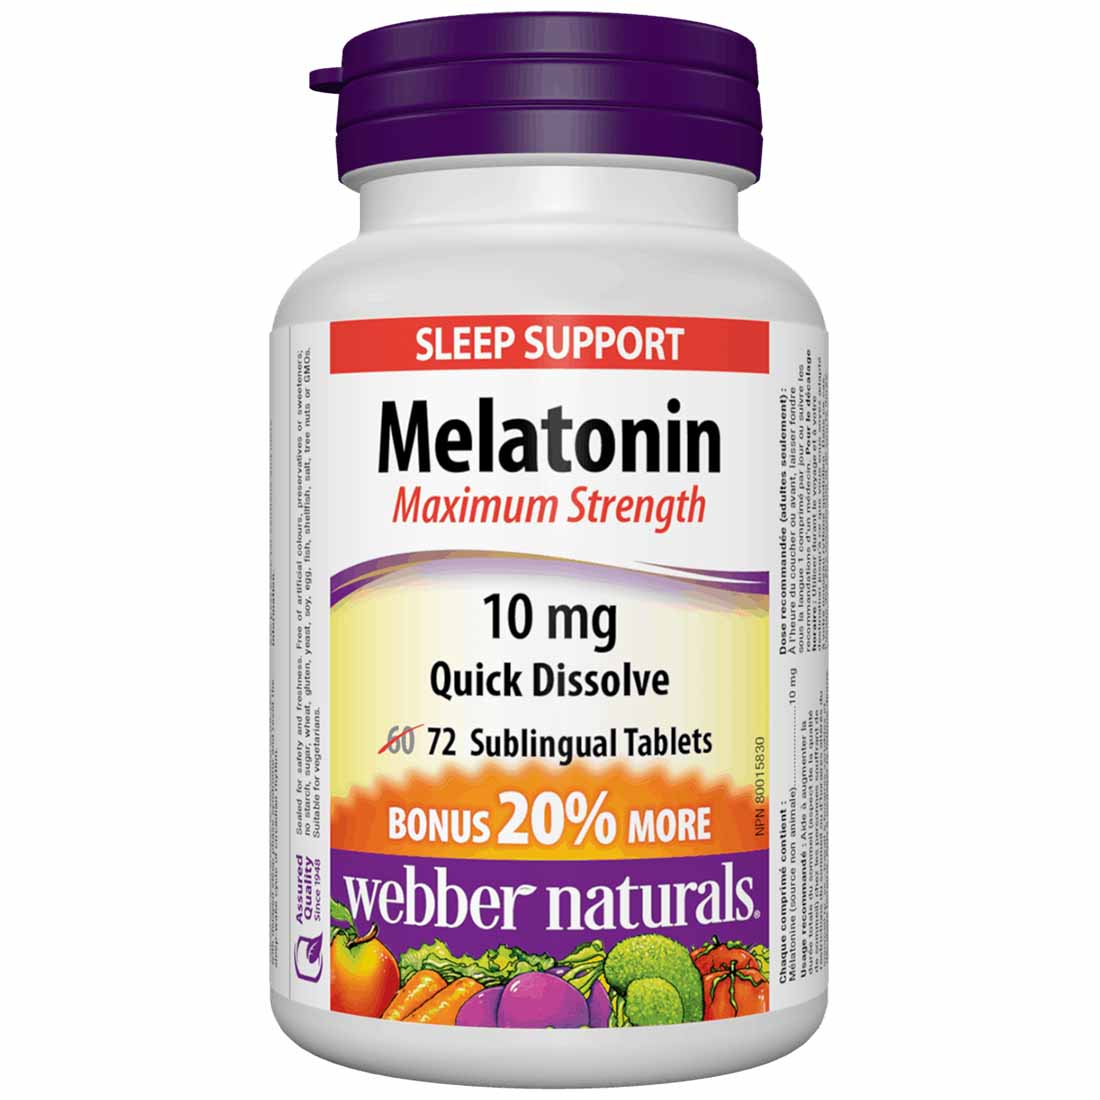 72 Sublingual Tablets | Webber Naturals Sleep Support Melatonin Maximum Strength 10mg Quick Dissolve